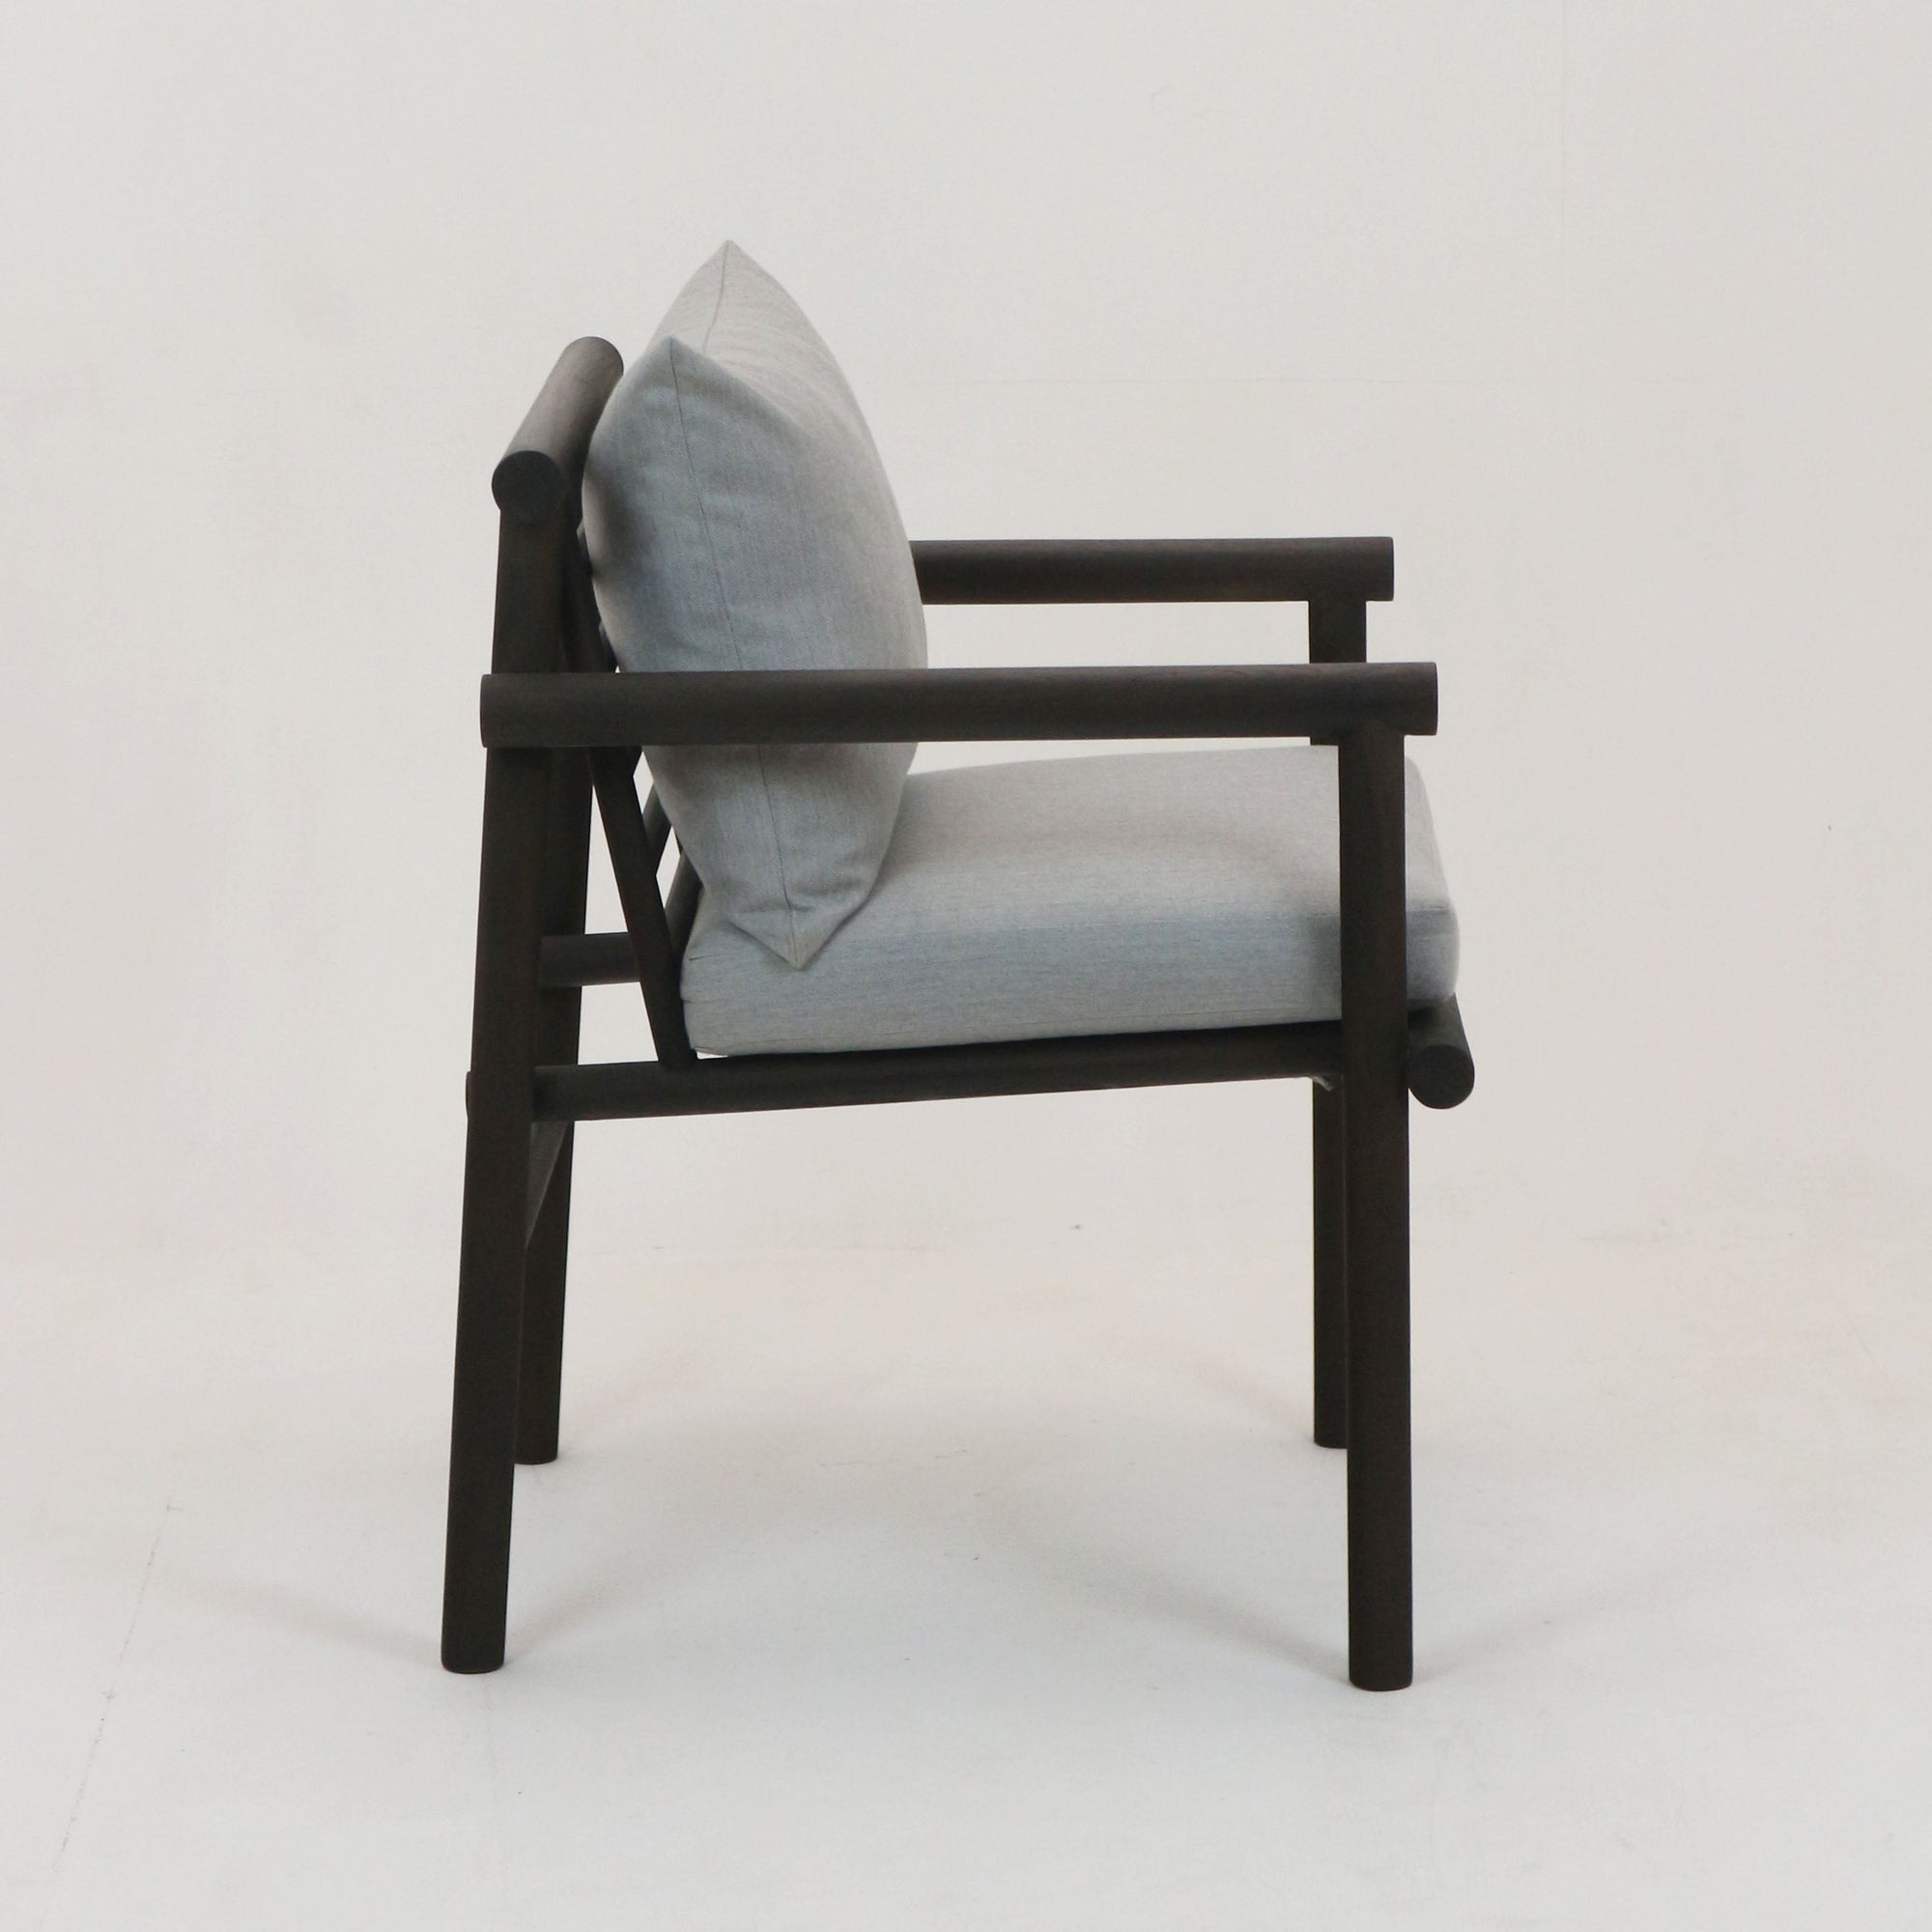 Pantia Patio Chair with Sunbrella Fabric - INTERIORTONIC